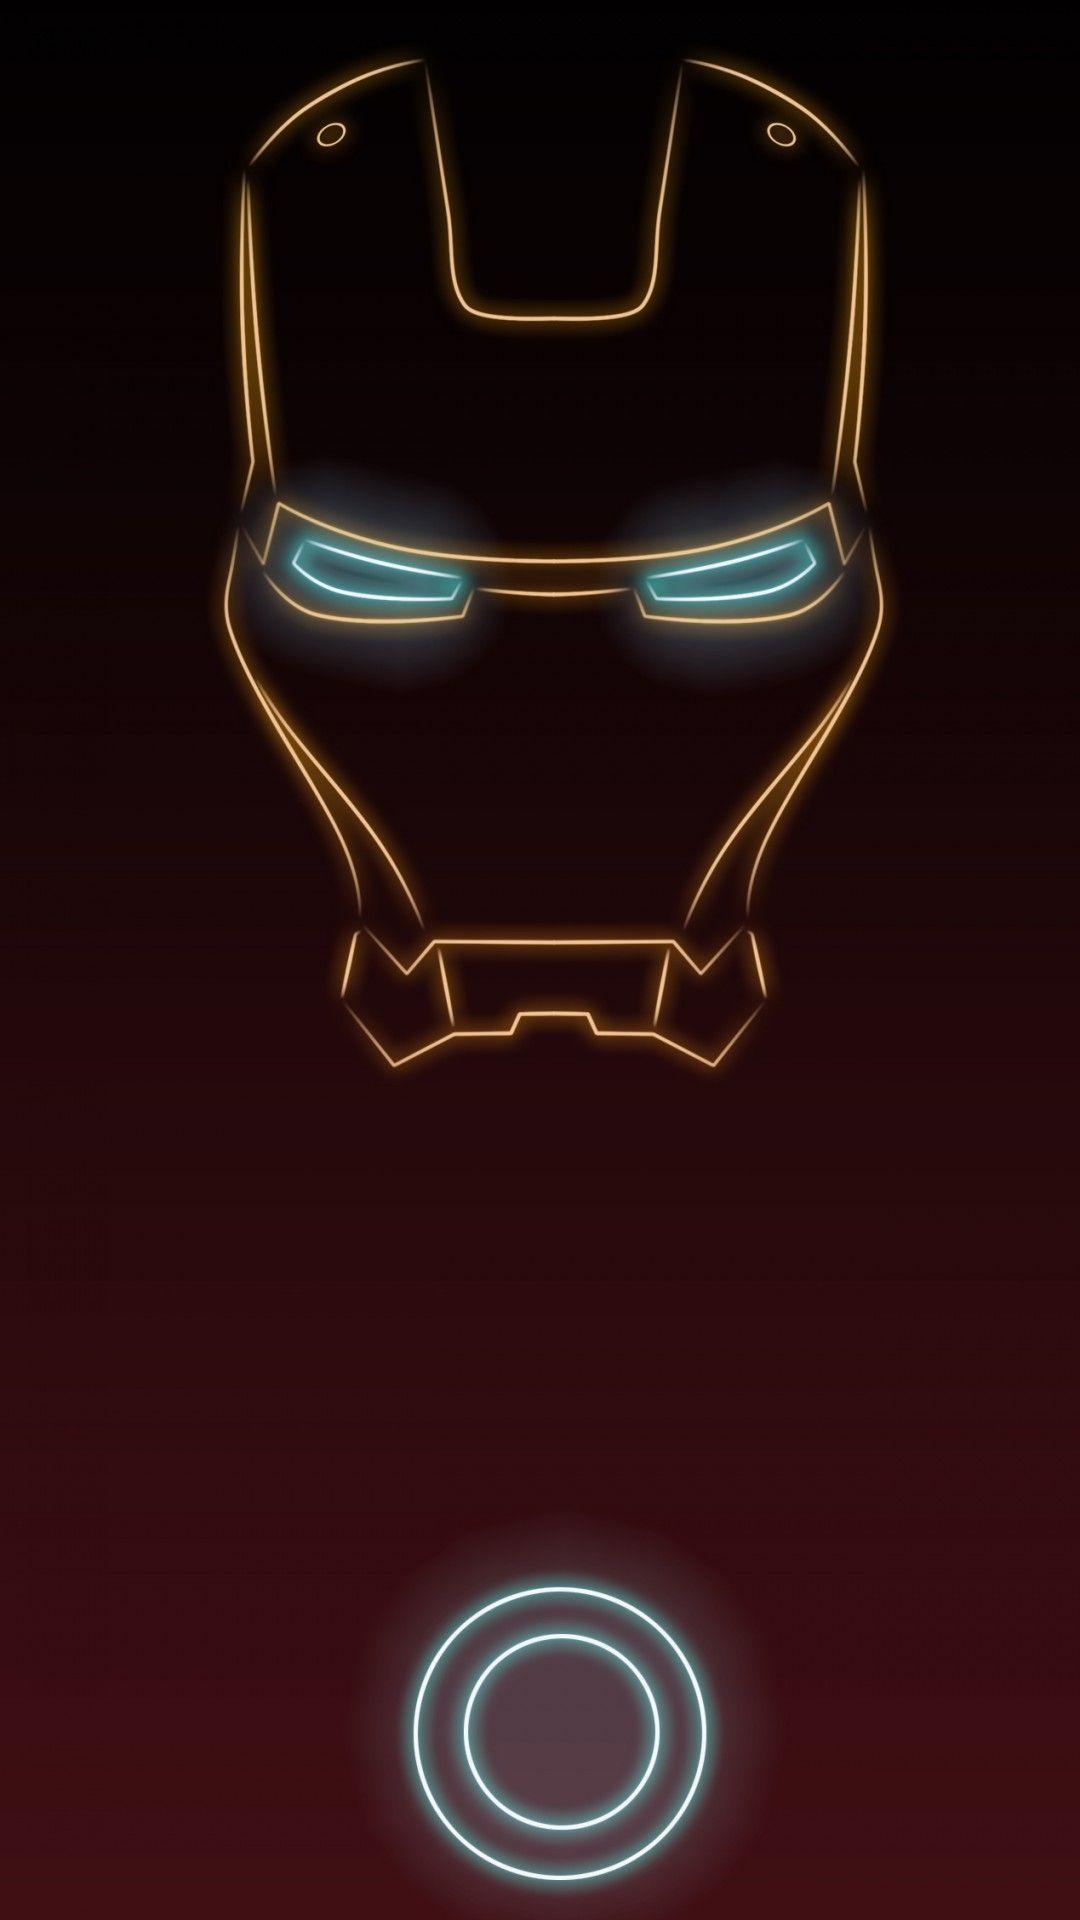 Iron man. Tap to see more Superheroes Glow With Neon Light Apple. Iron man wallpaper, Man wallpaper, Superhero wallpaper